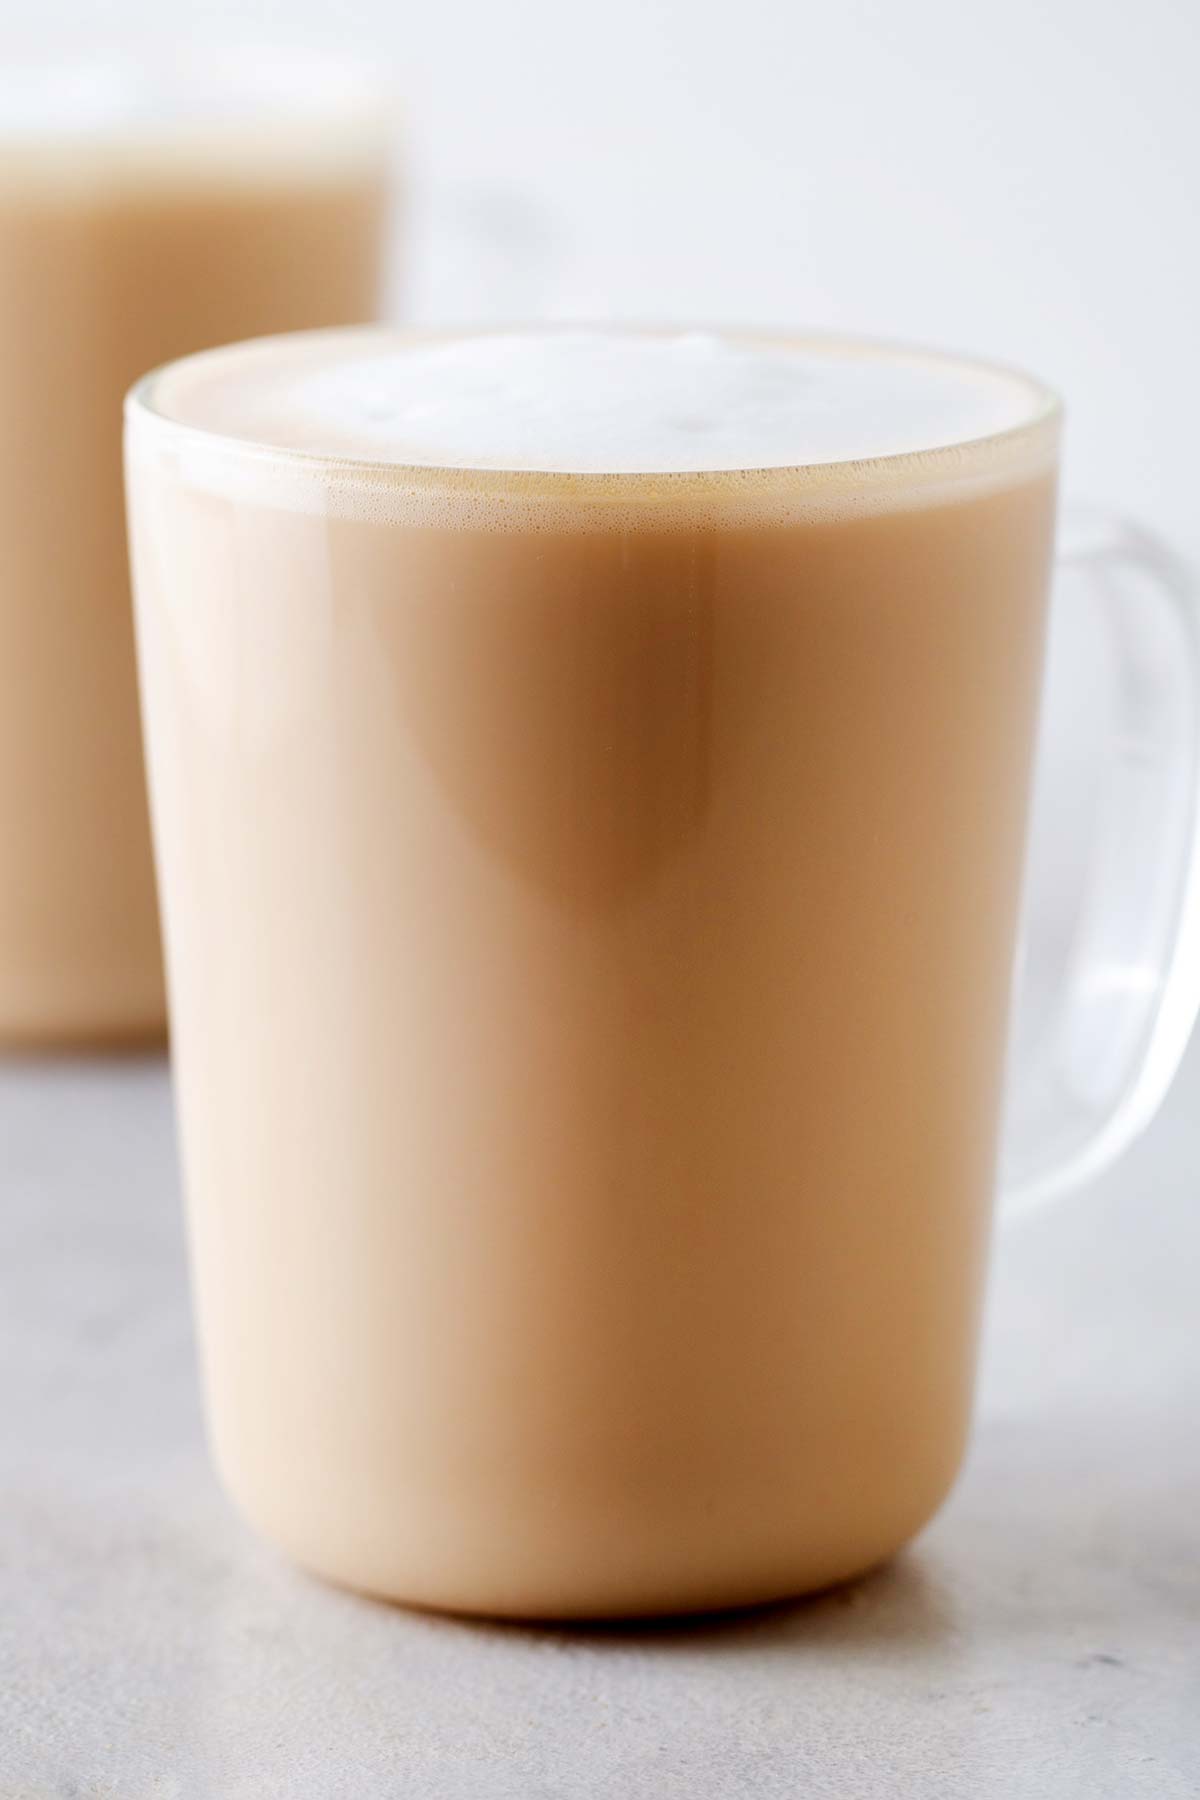 Starbucks Blonde Vanilla Latte in a clear glass mug.